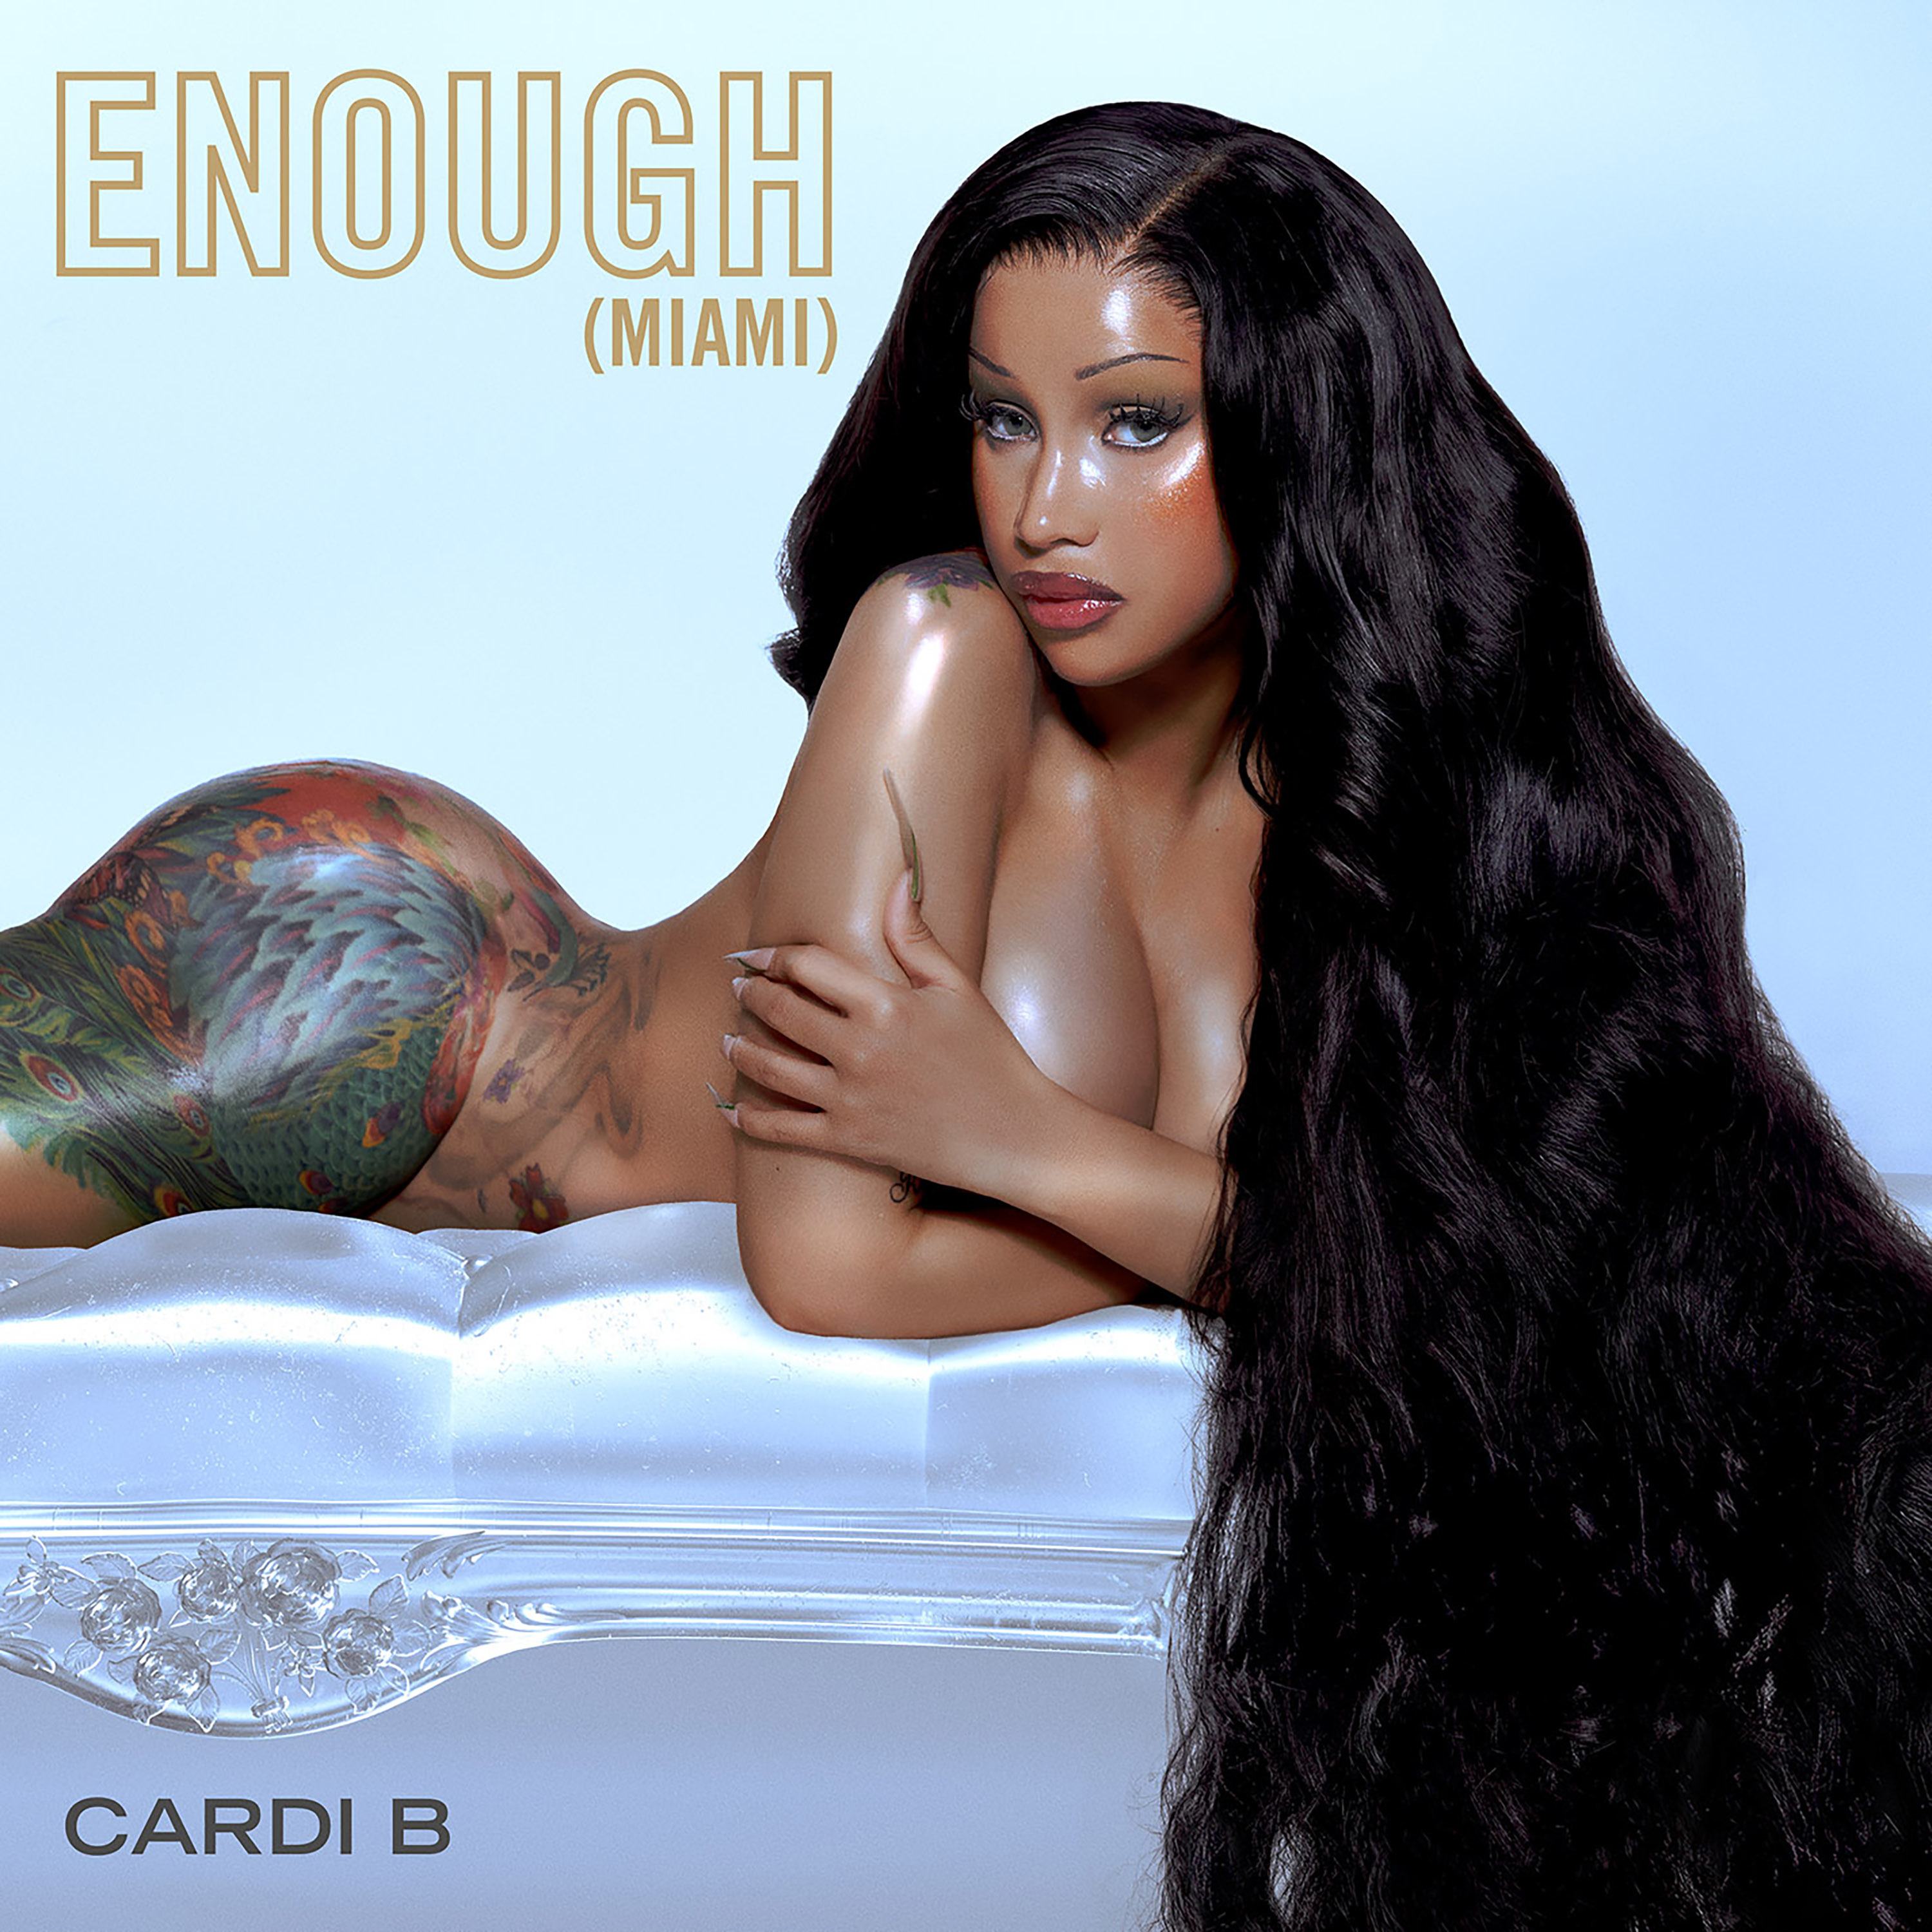 Cardi B Enough (Miami) cover artwork